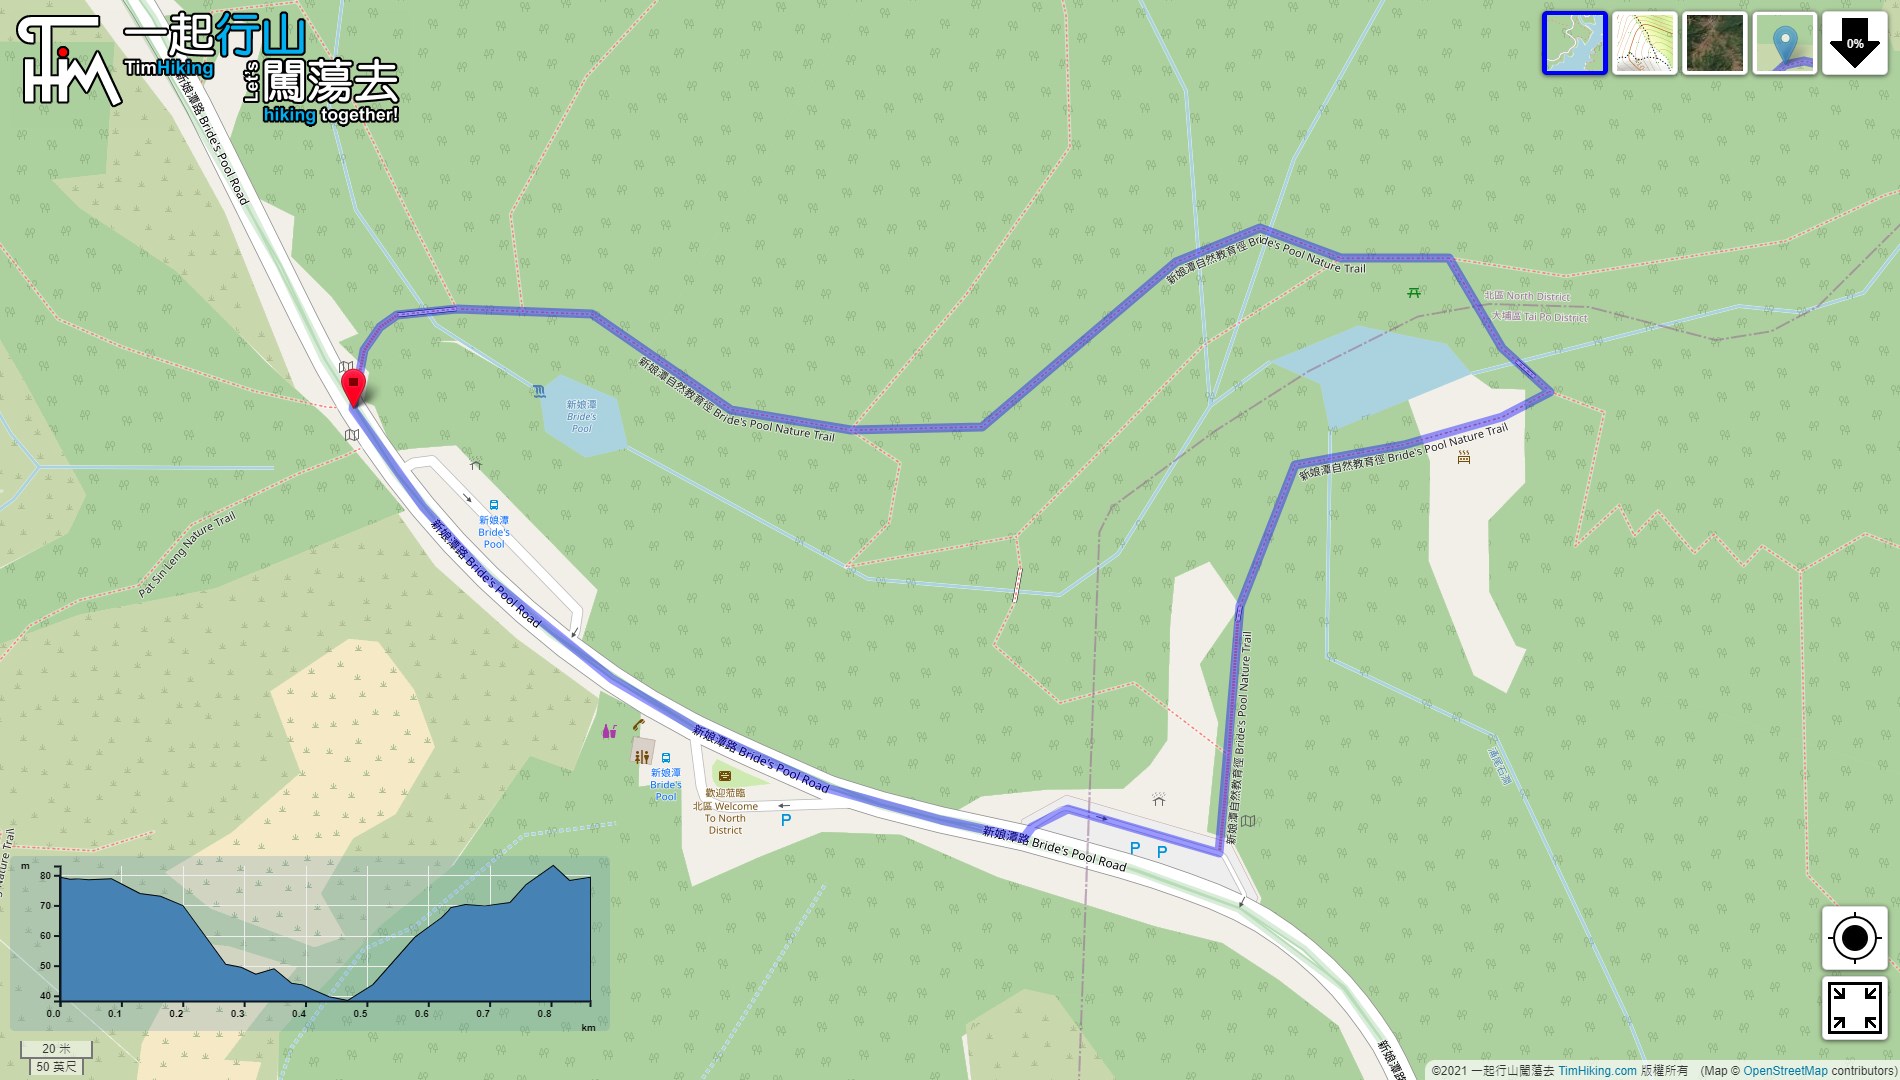 「Bride's Pool Nature Trail」路線Map